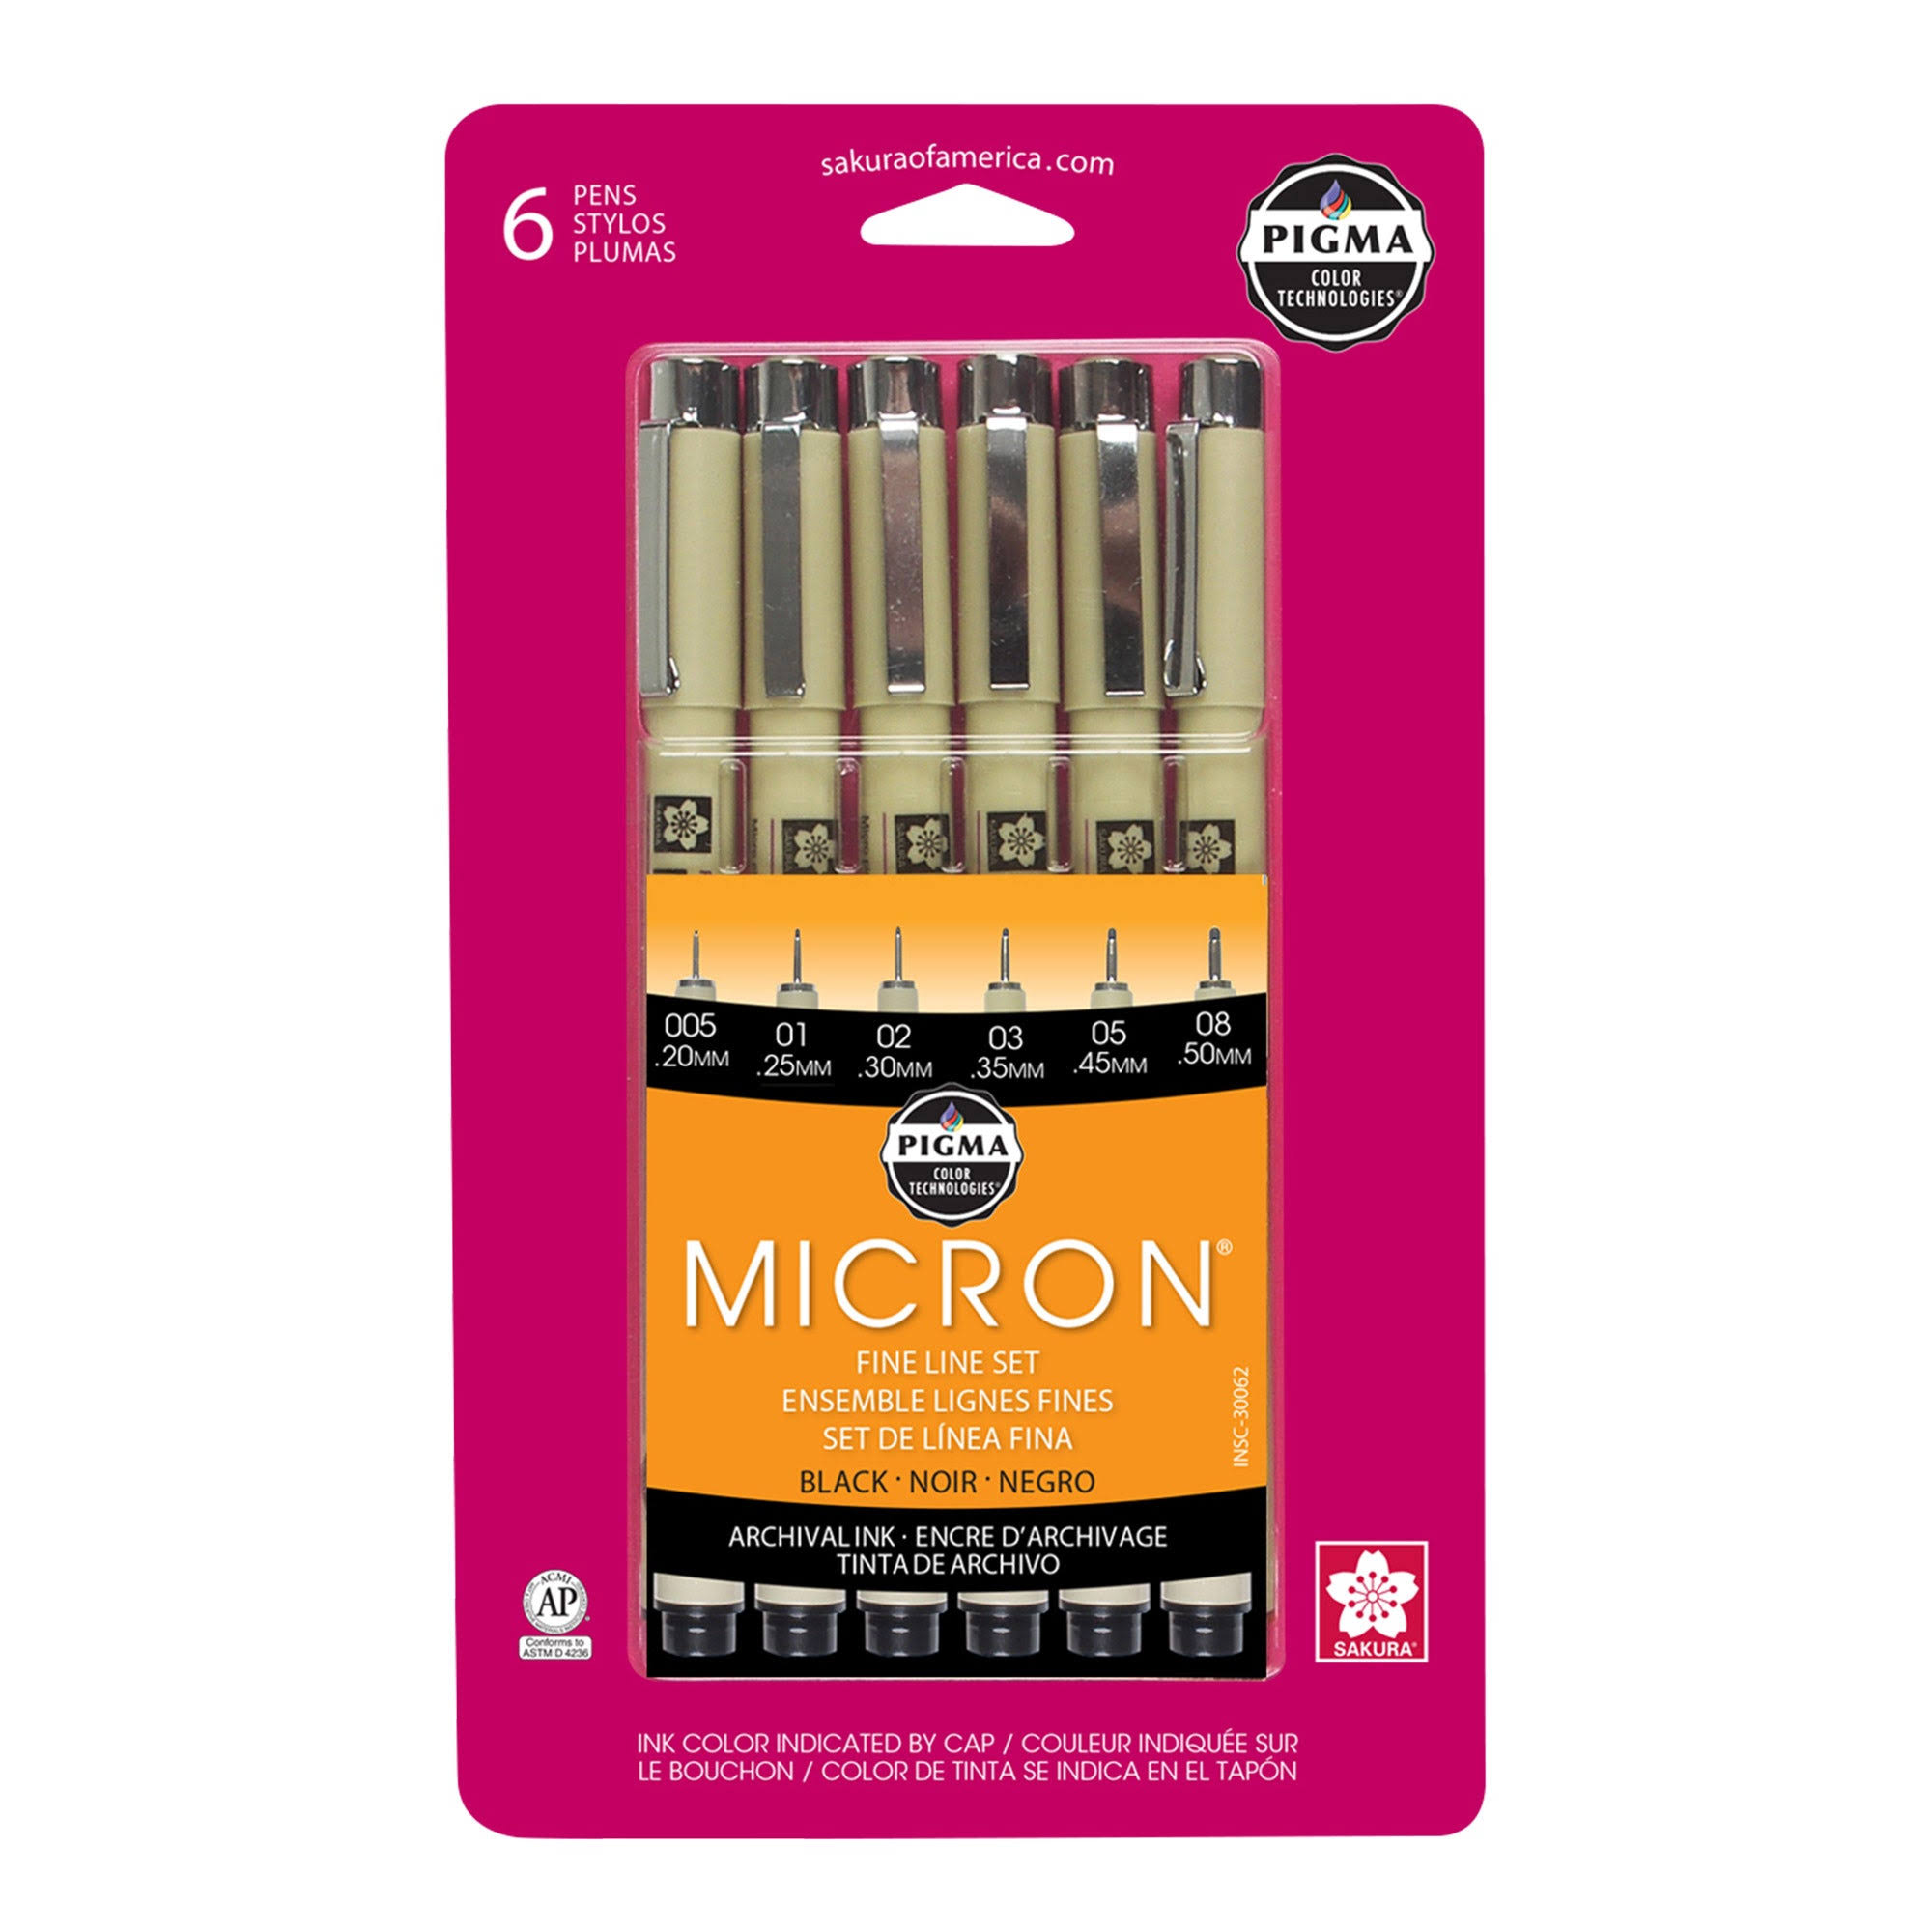 Sakura Pigma Micron Clam Ink Pen Set - Black, 6pcs